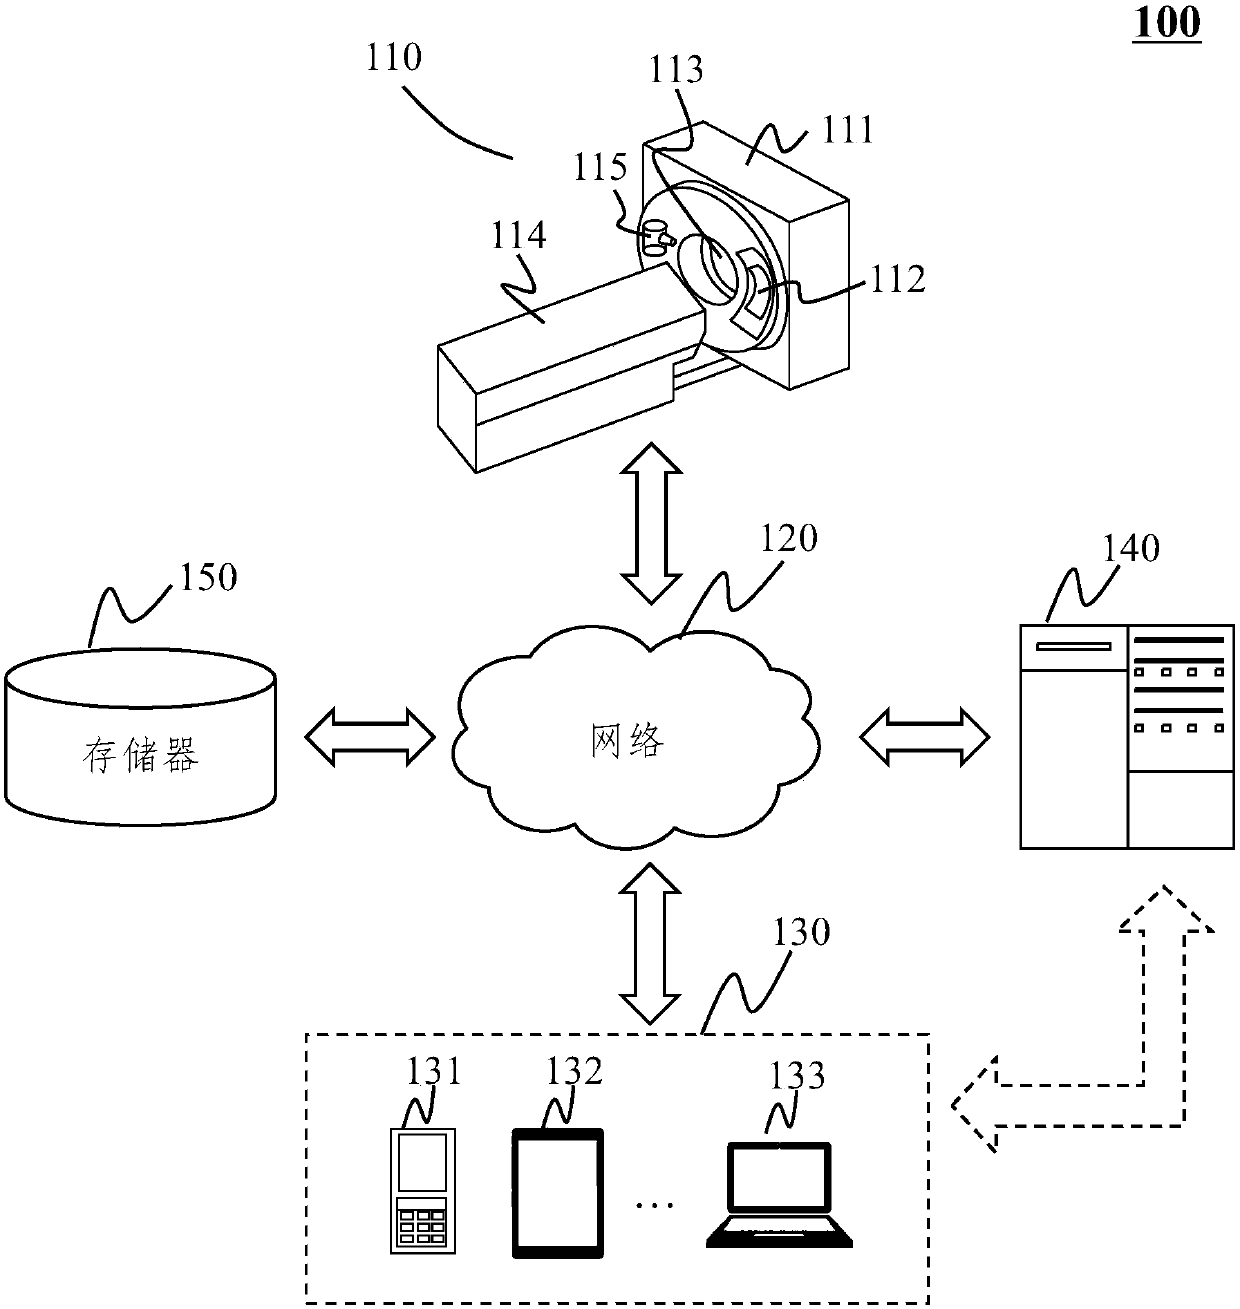 Image segmentation system, method and apparatus, and computer readable storage medium